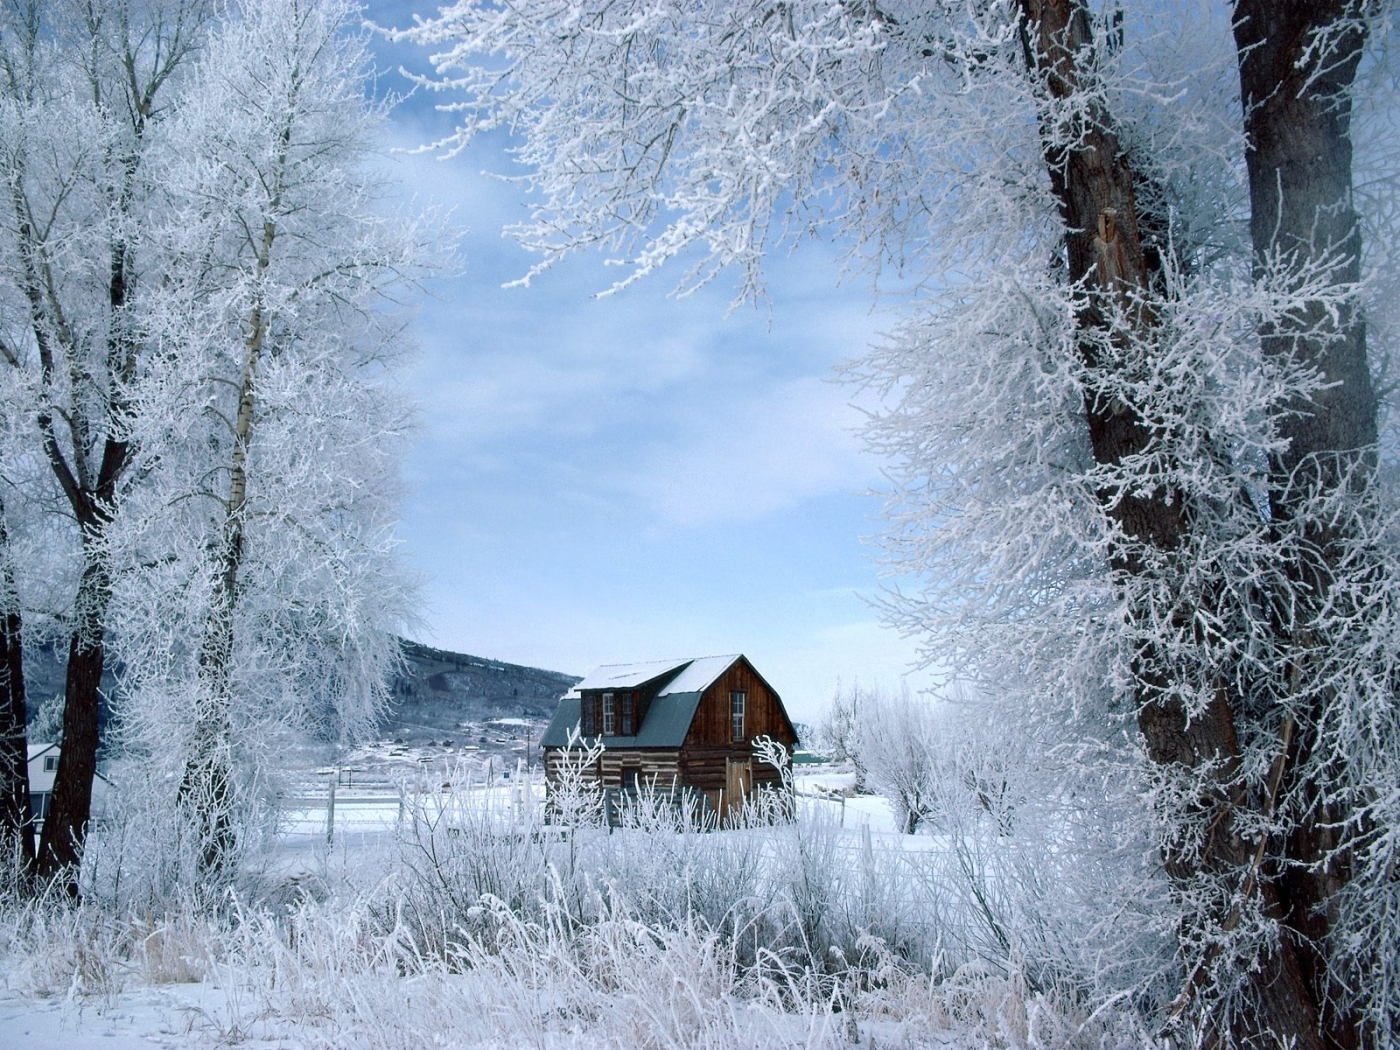 41998 descargar imagen paisaje, invierno, naturaleza, azul: fondos de pantalla y protectores de pantalla gratis